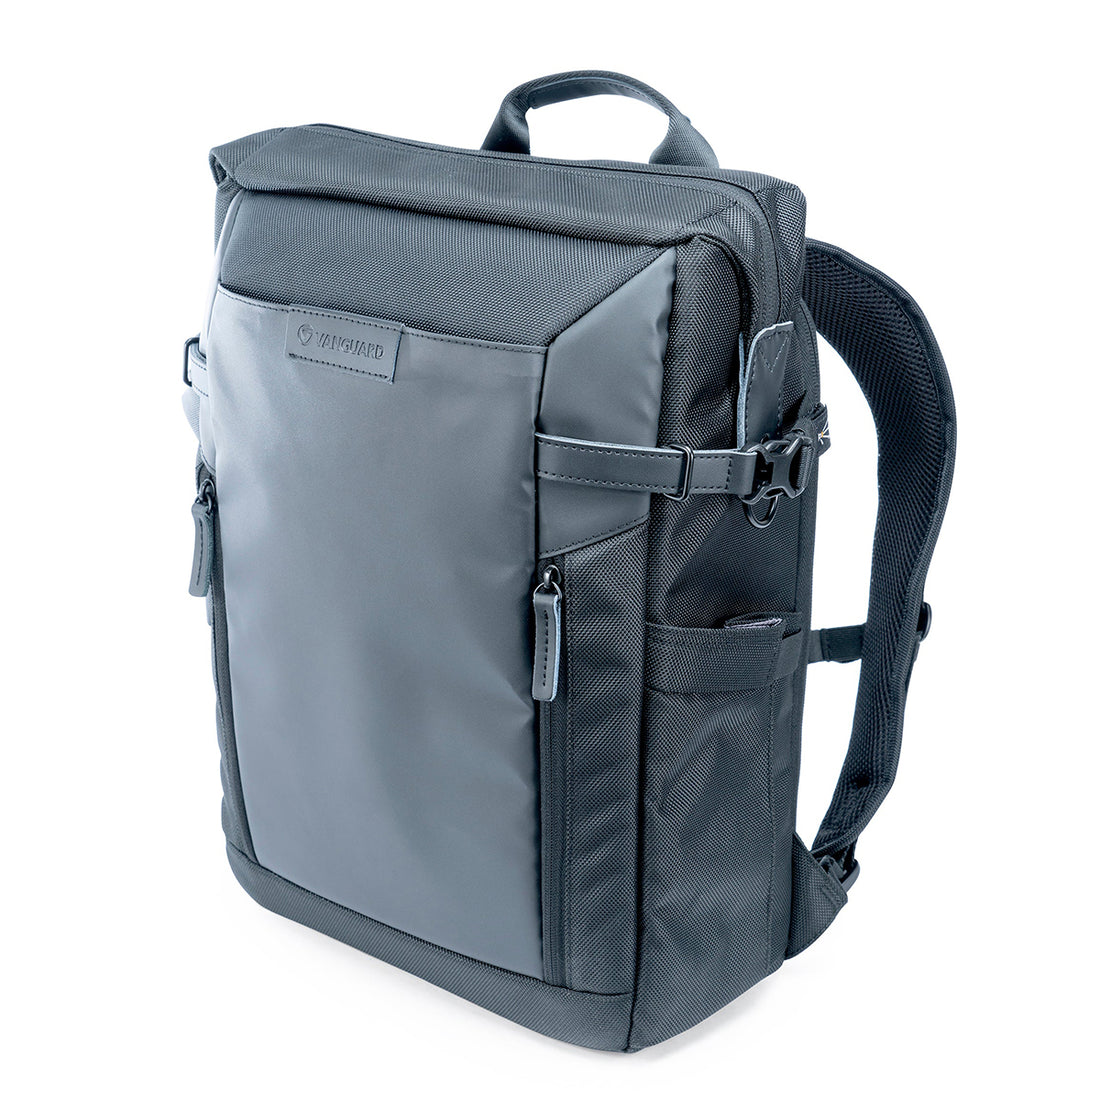 Vanguard Mochila Durable VEO Select 41 Large Lightweight Backpack - Black